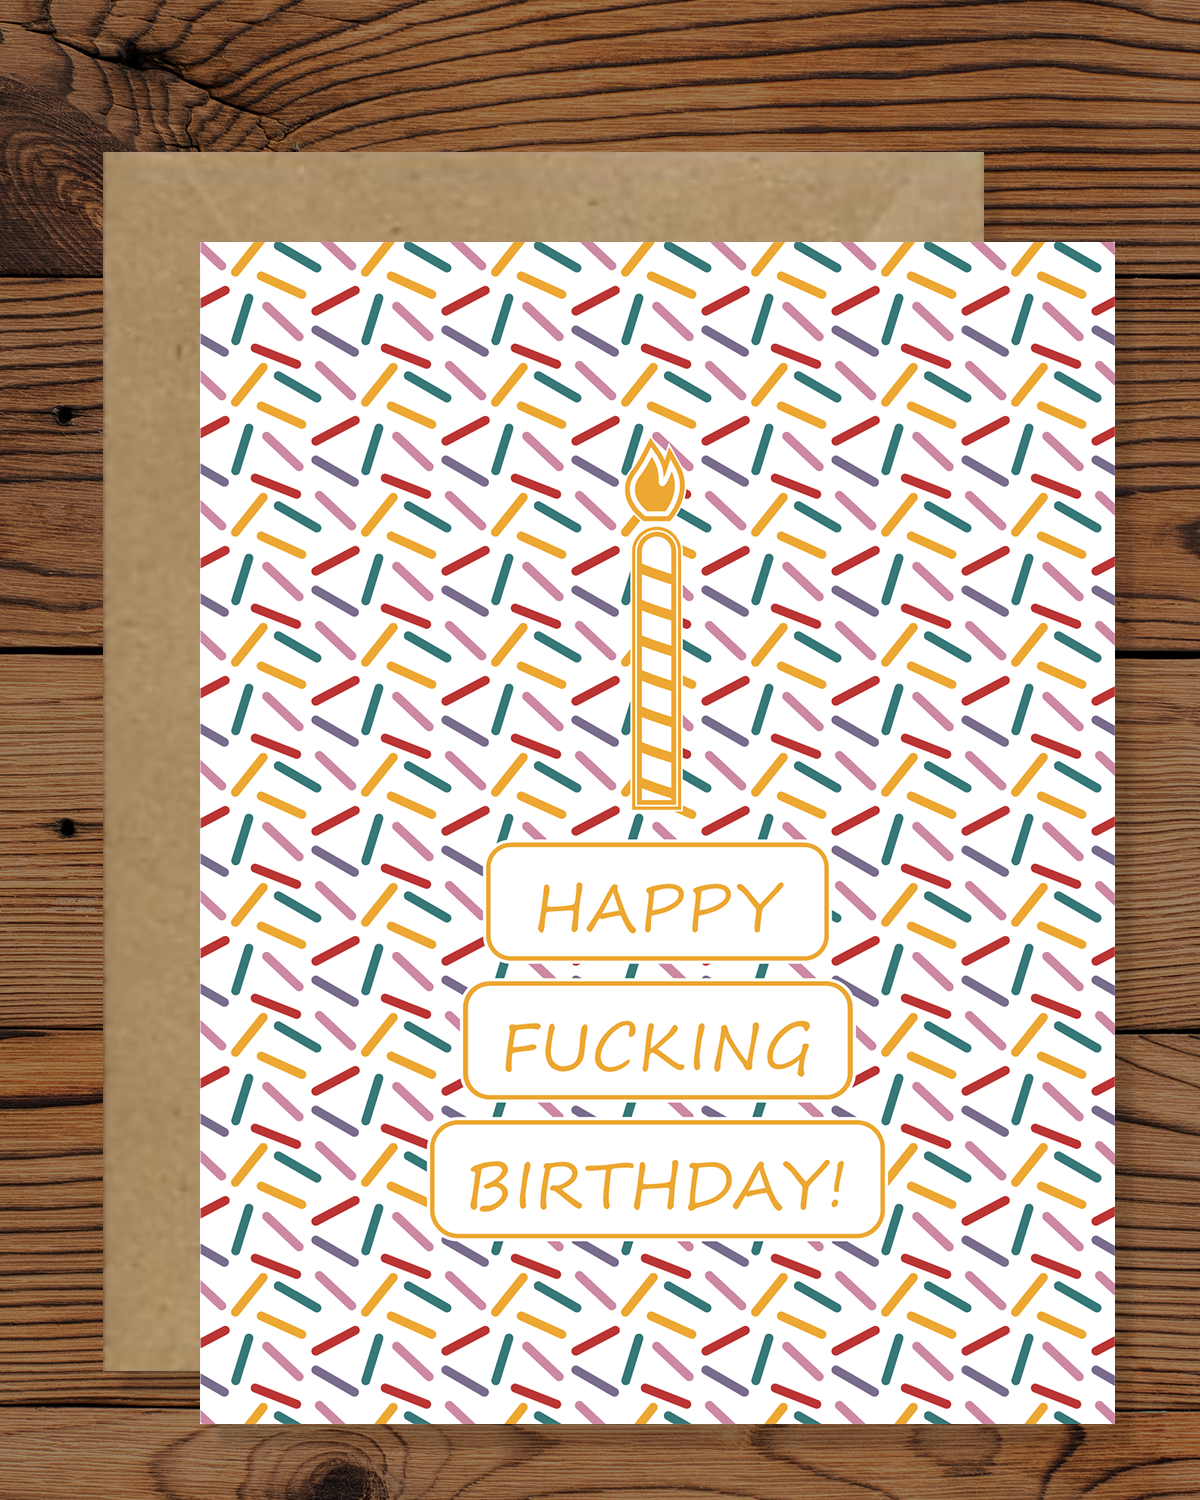 Big Sprinkle Cake Birthday Card | Happy Fucking Birthday Card | Sprinkle Cake Greeting Card